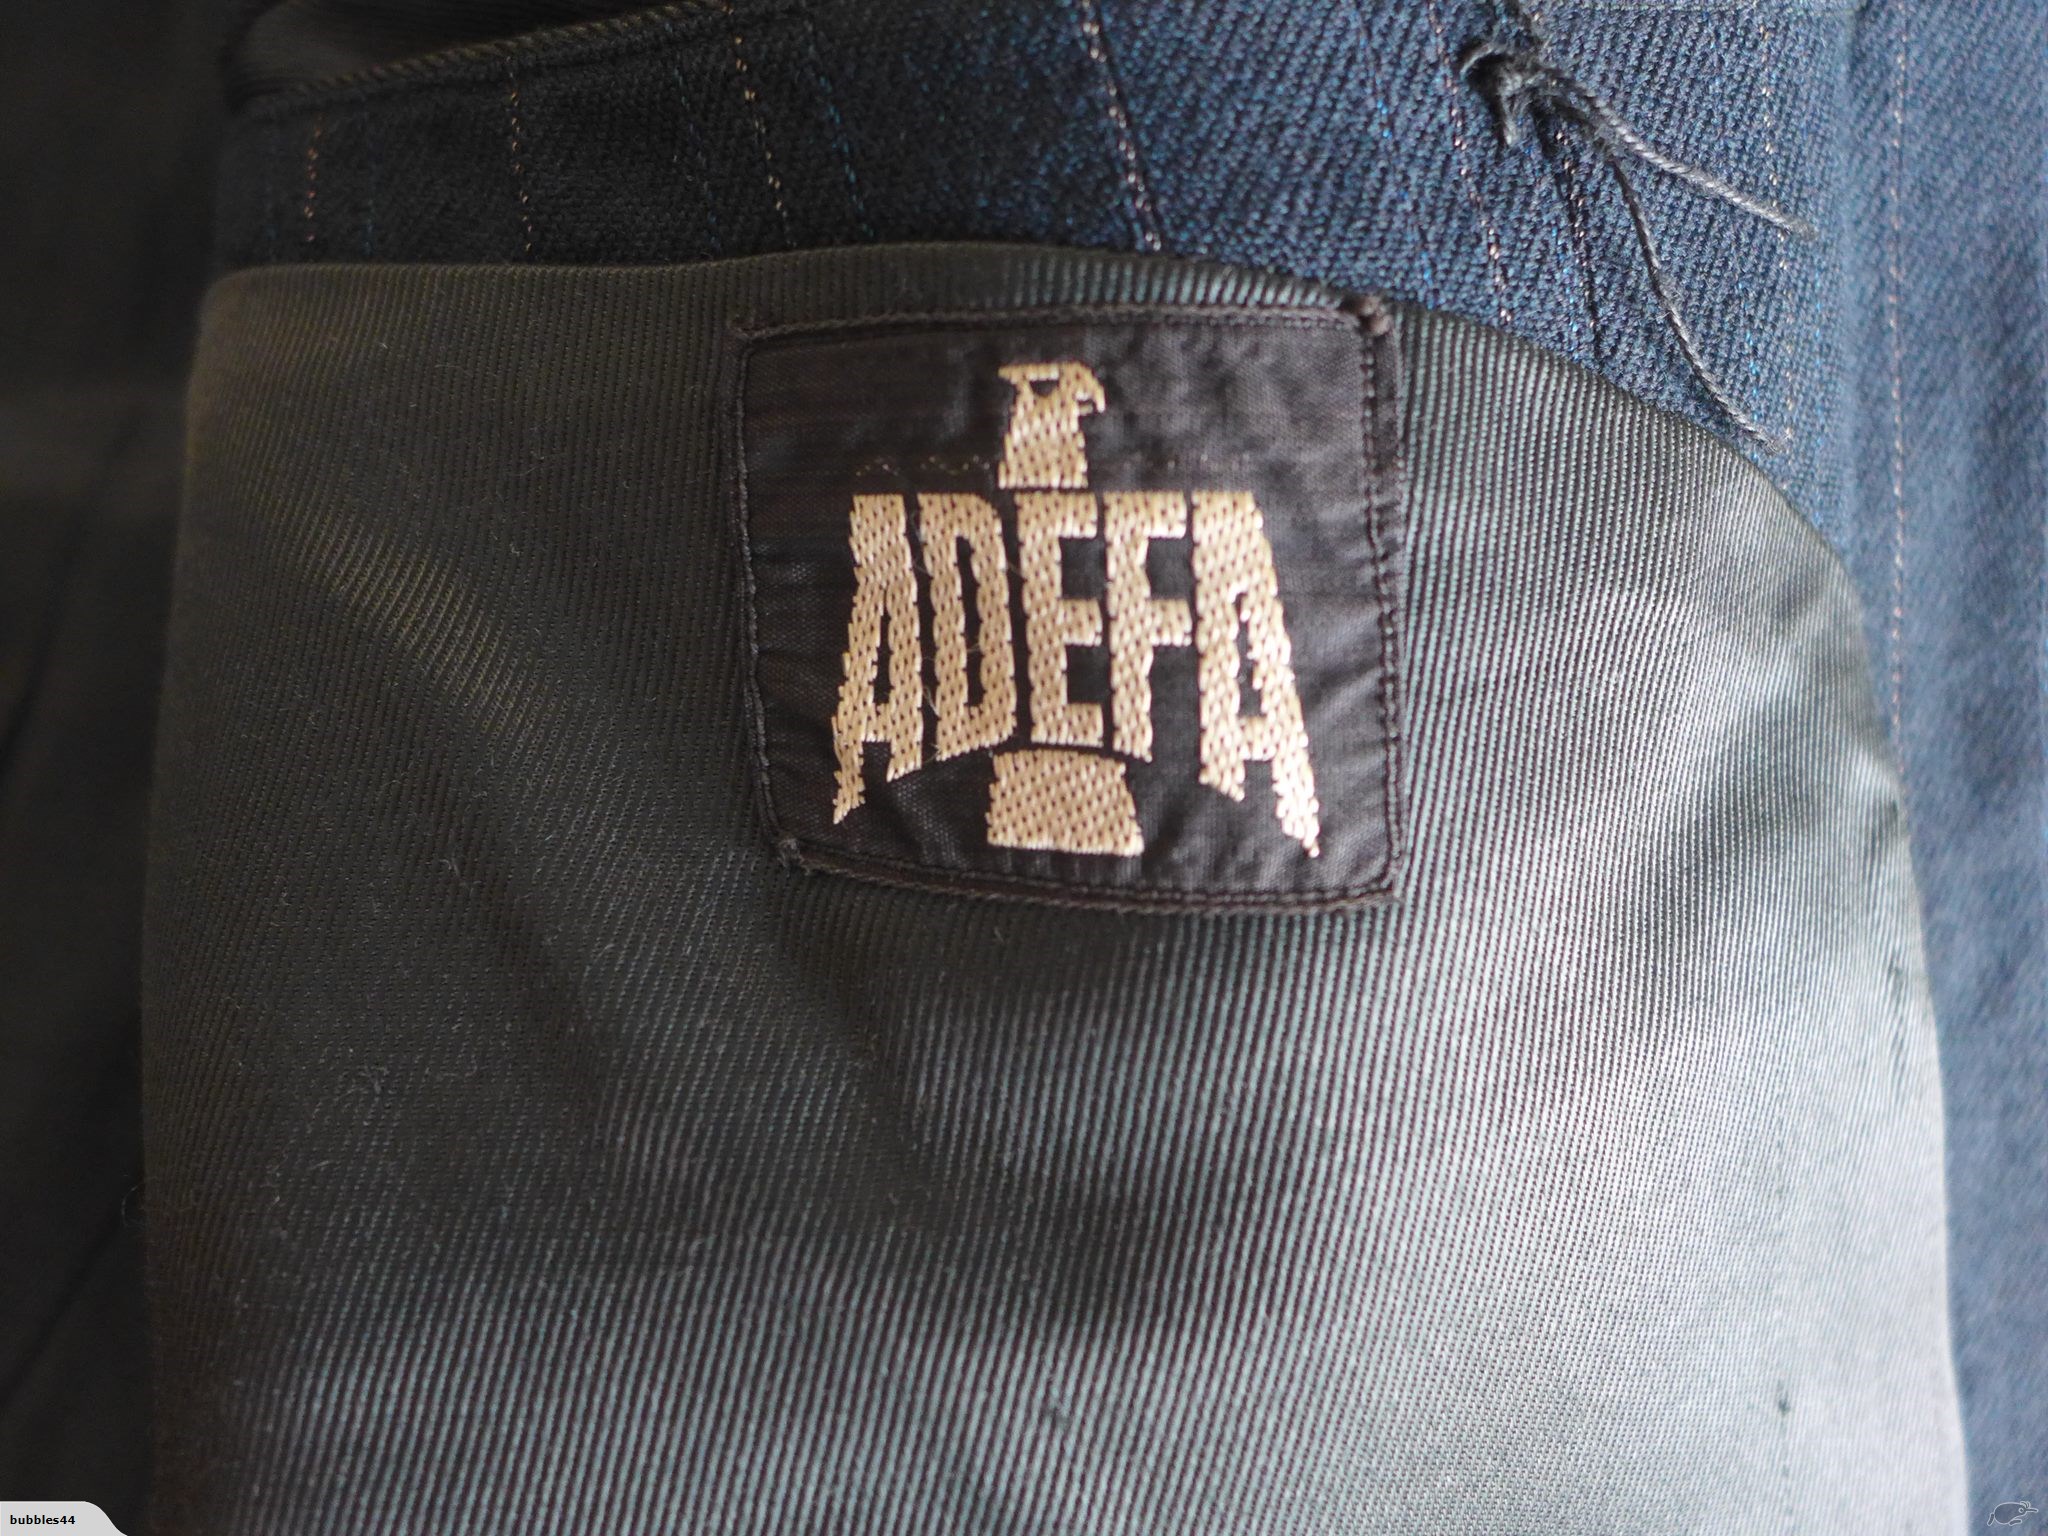 ADEFA Label